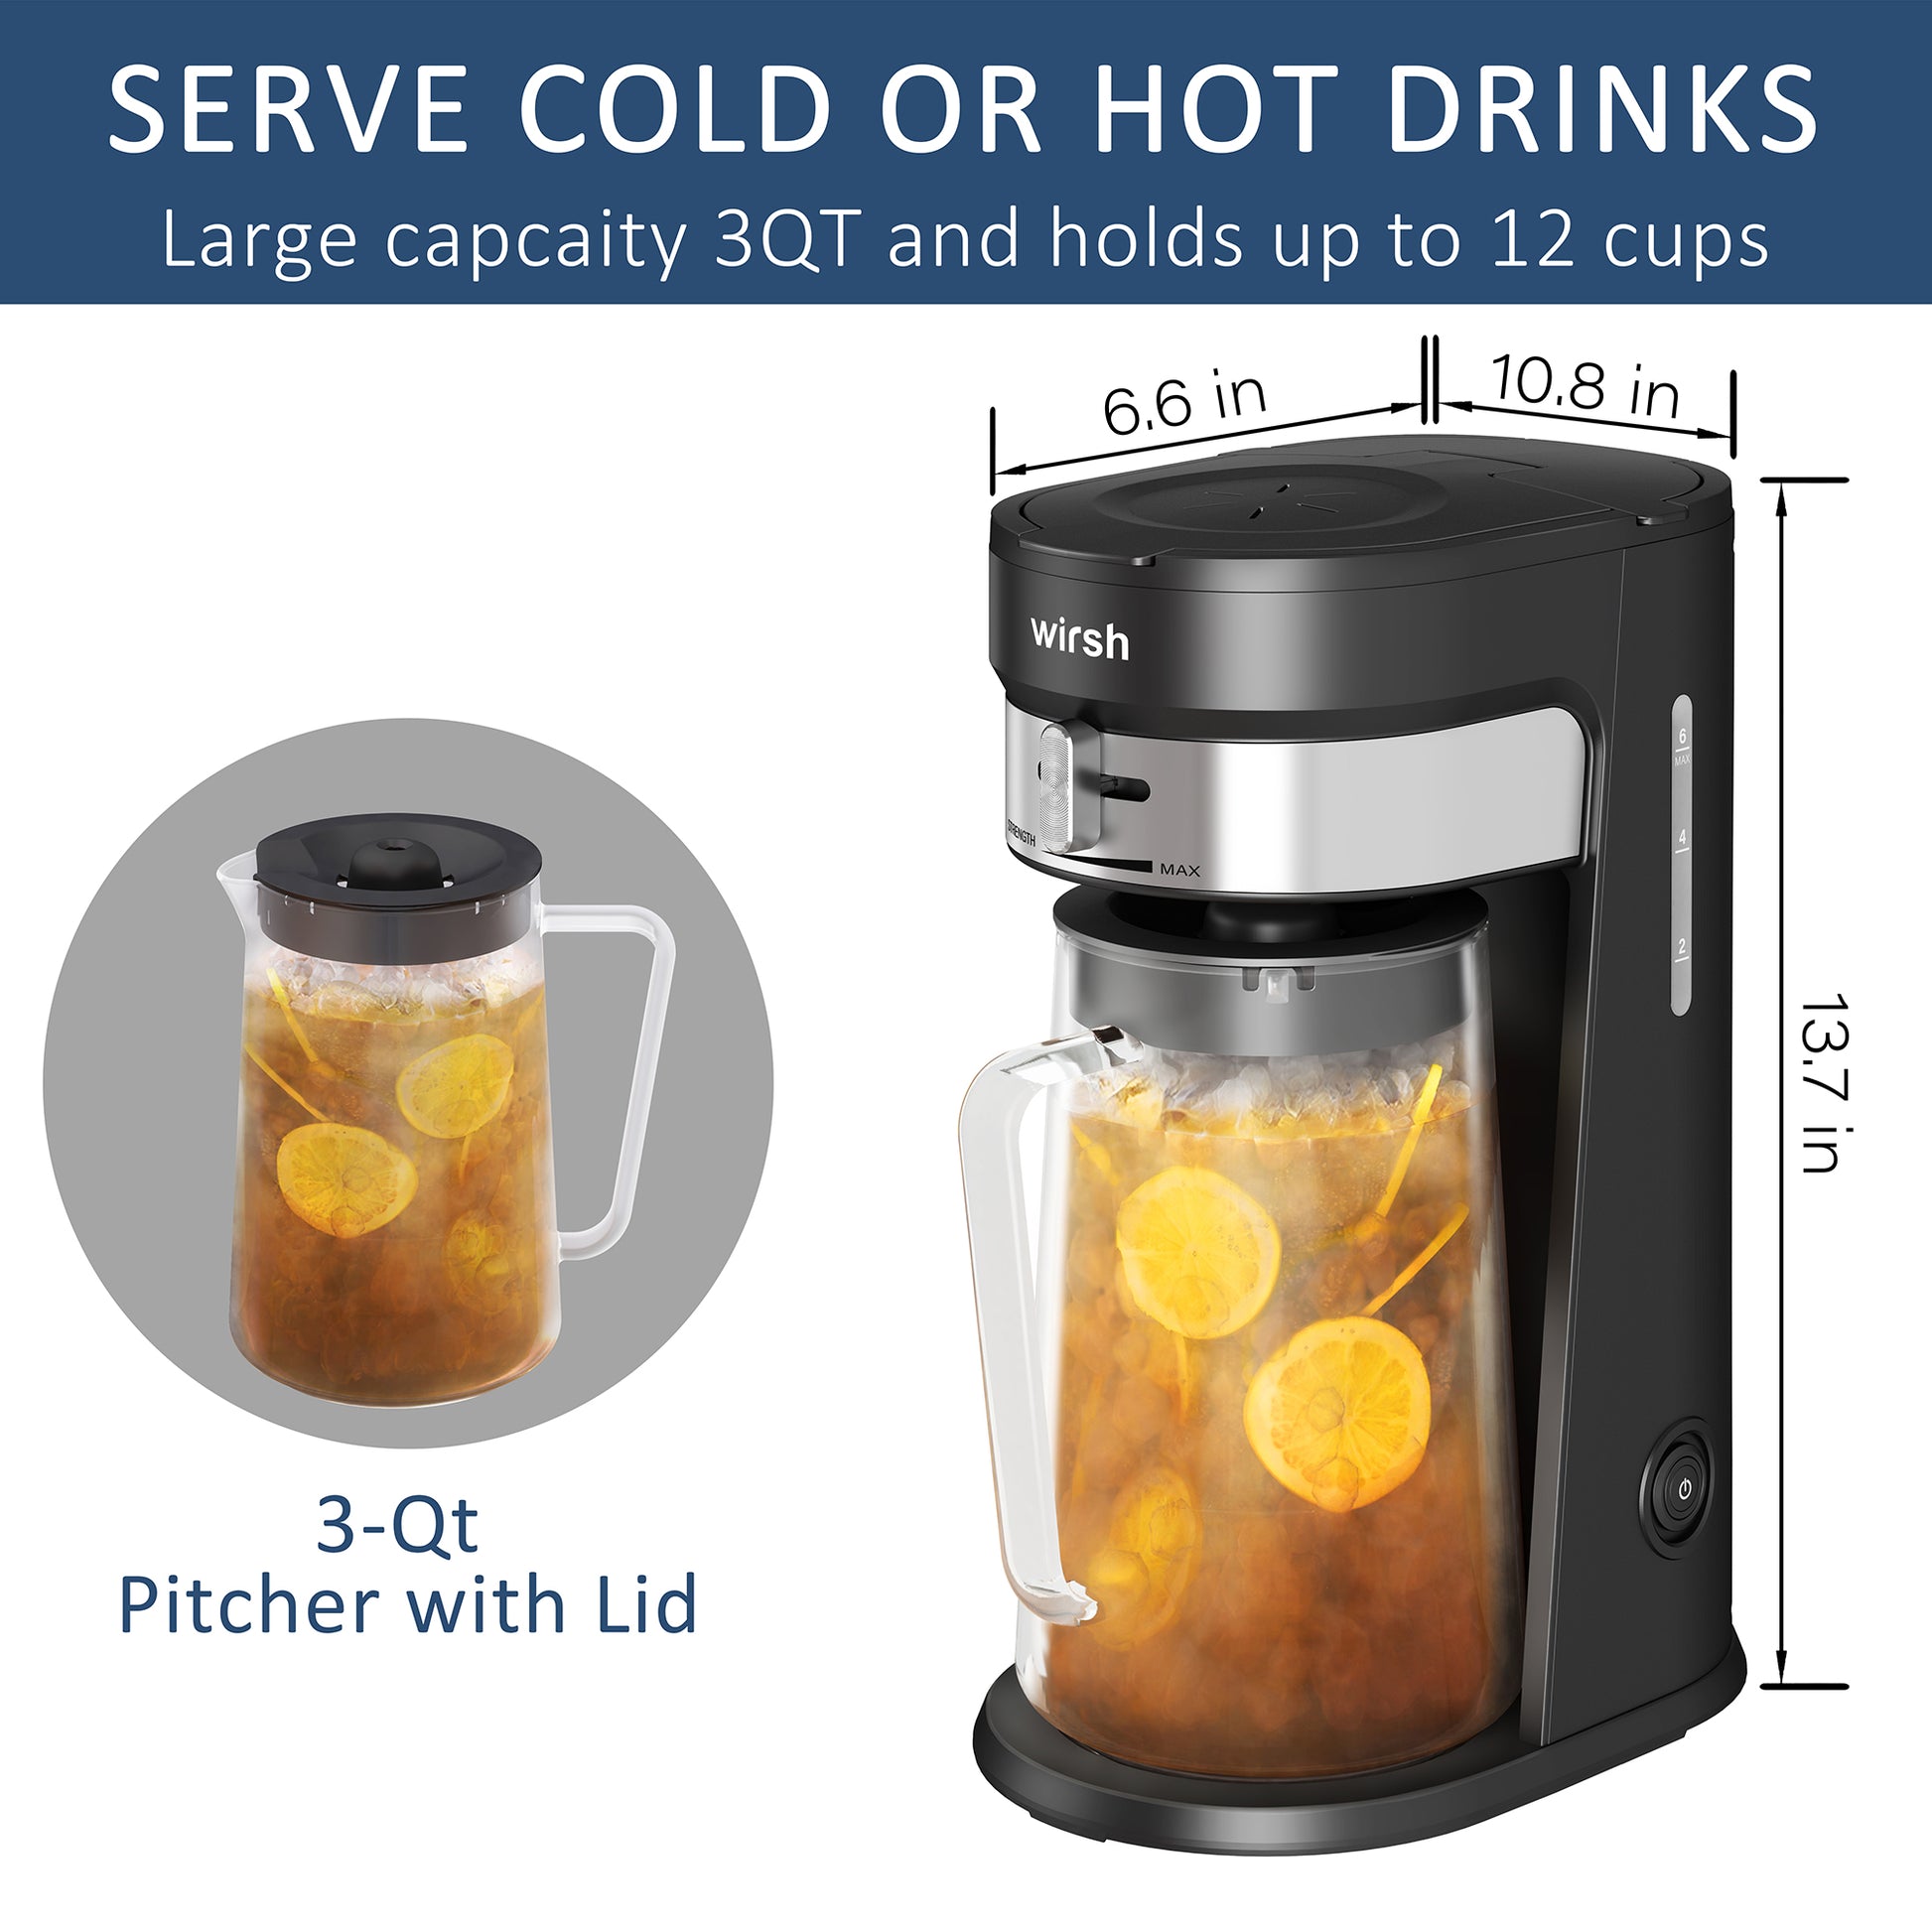 < img src="ice tea coffee maker.jpg" alt="wirsh ice tea coffee maker 3Qt pitcher"/>